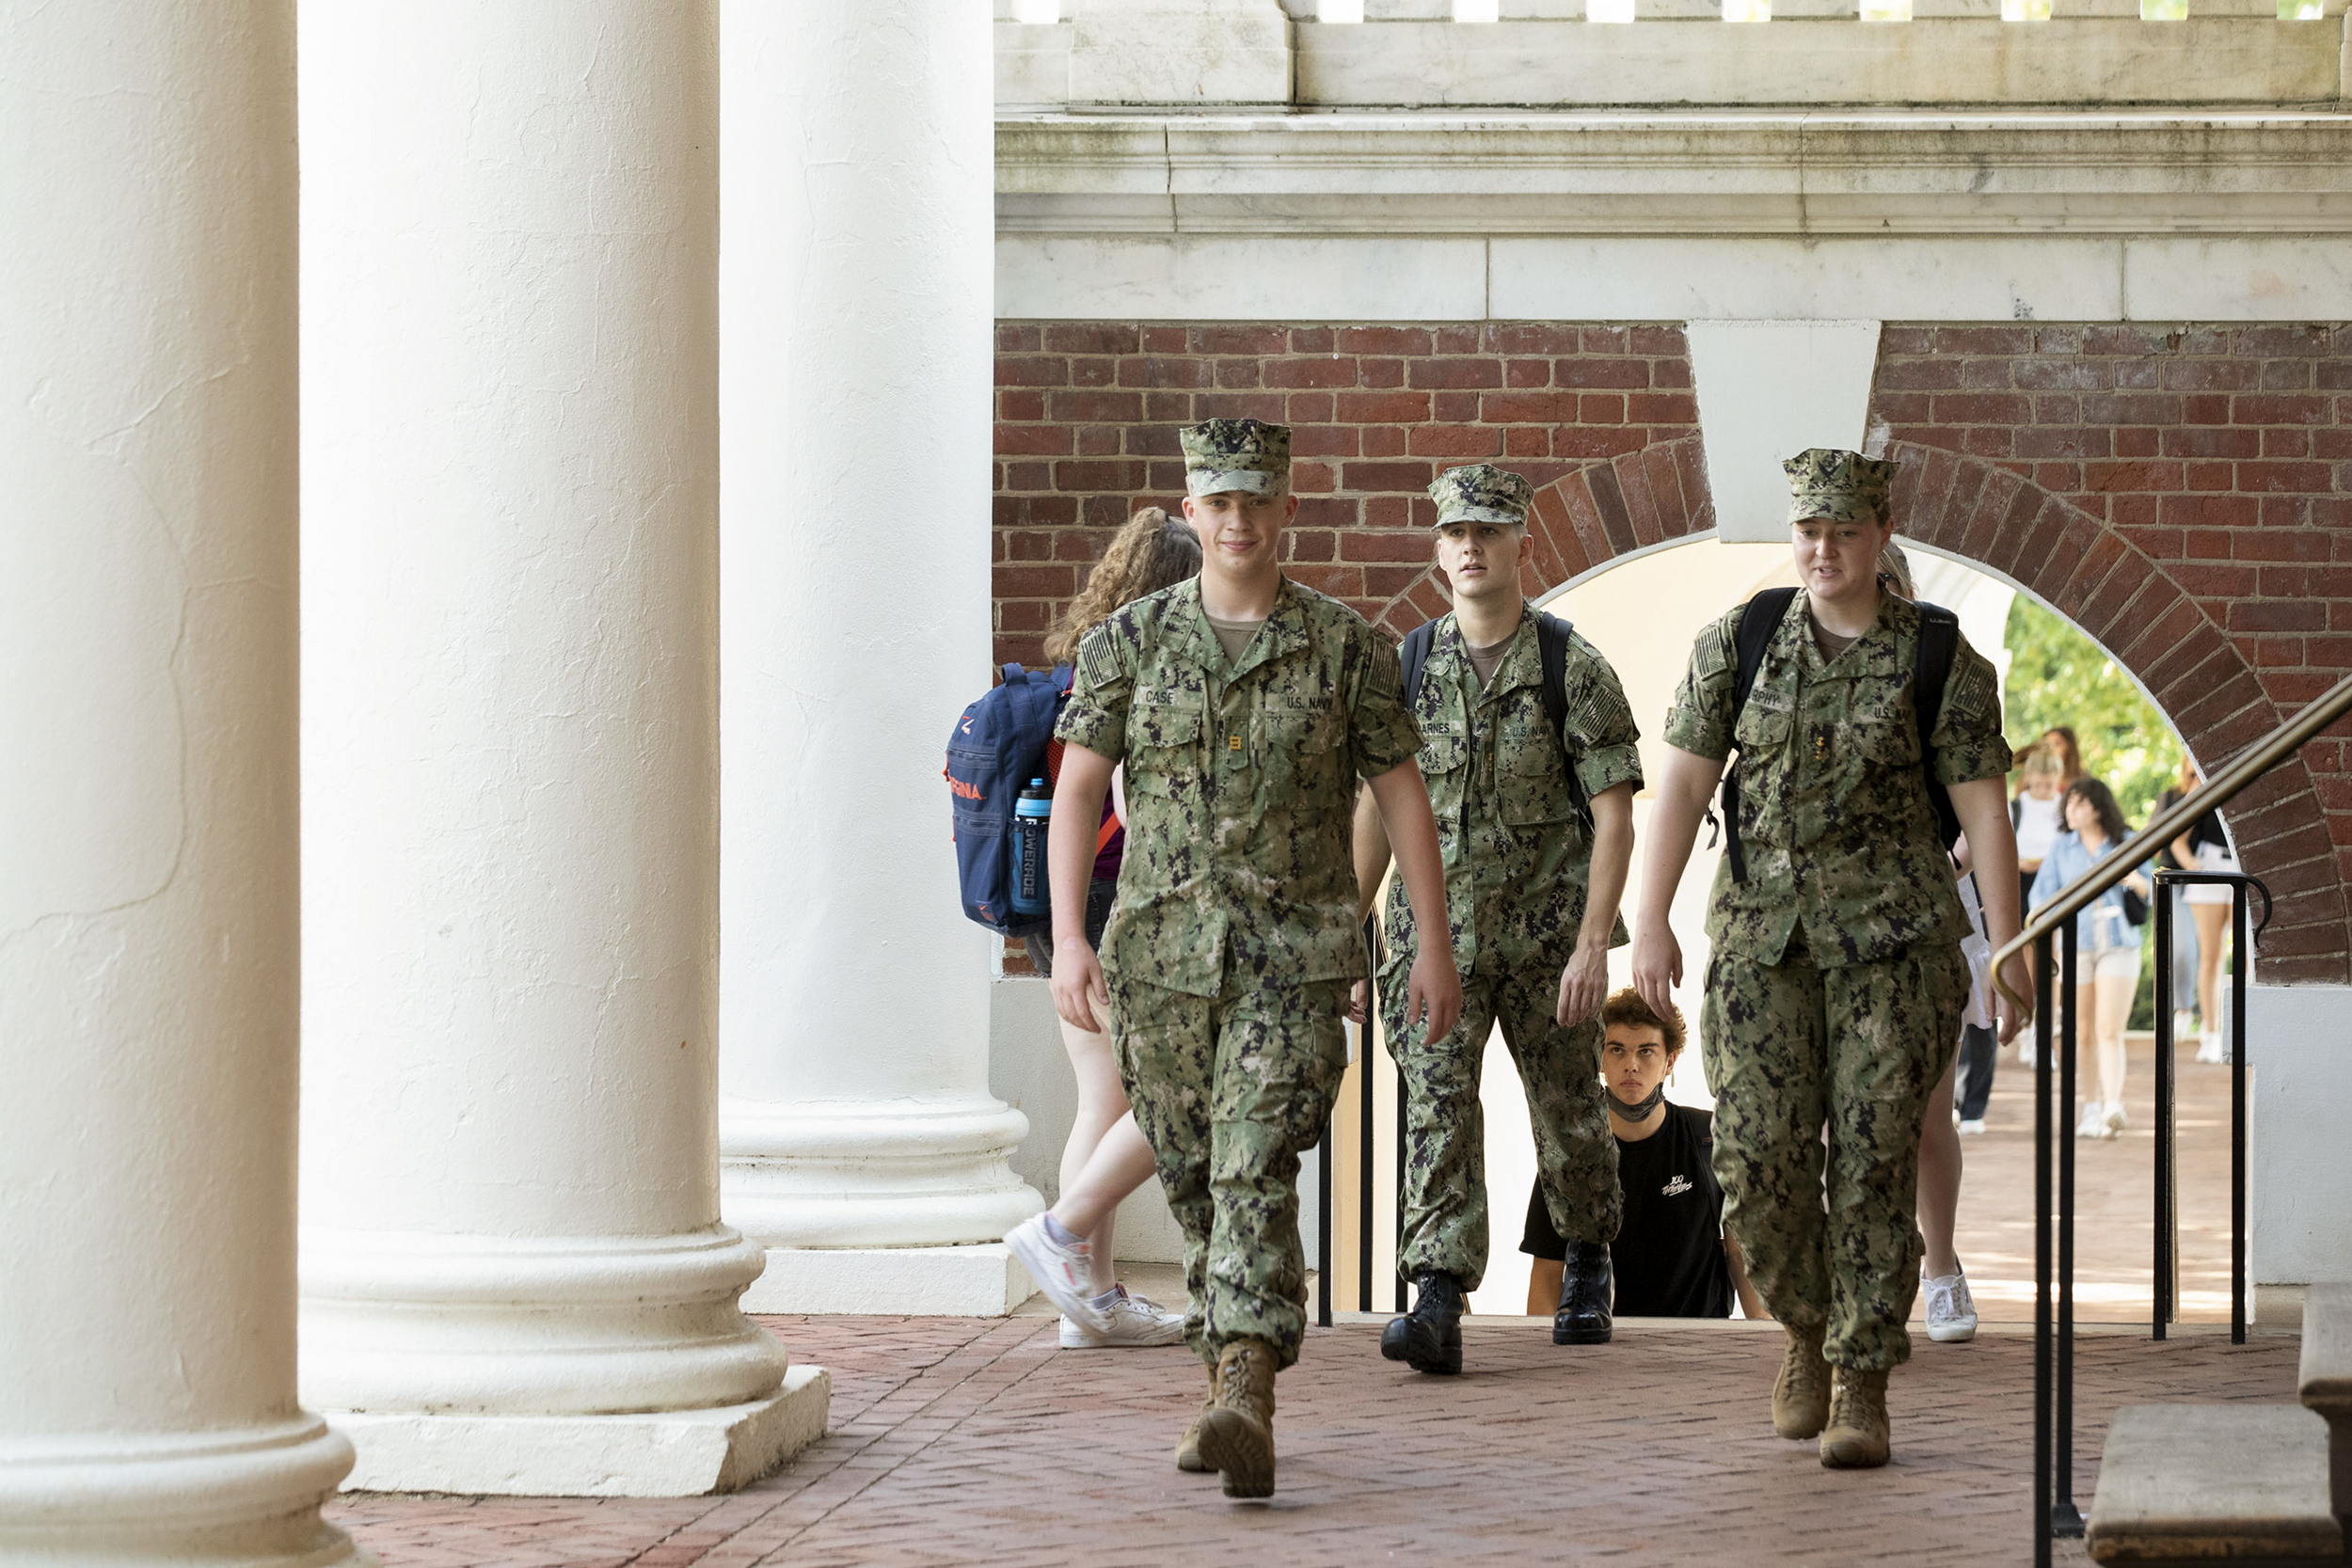 Navy ROTC students, dressed in their uniforms walking on a brick sidewalk